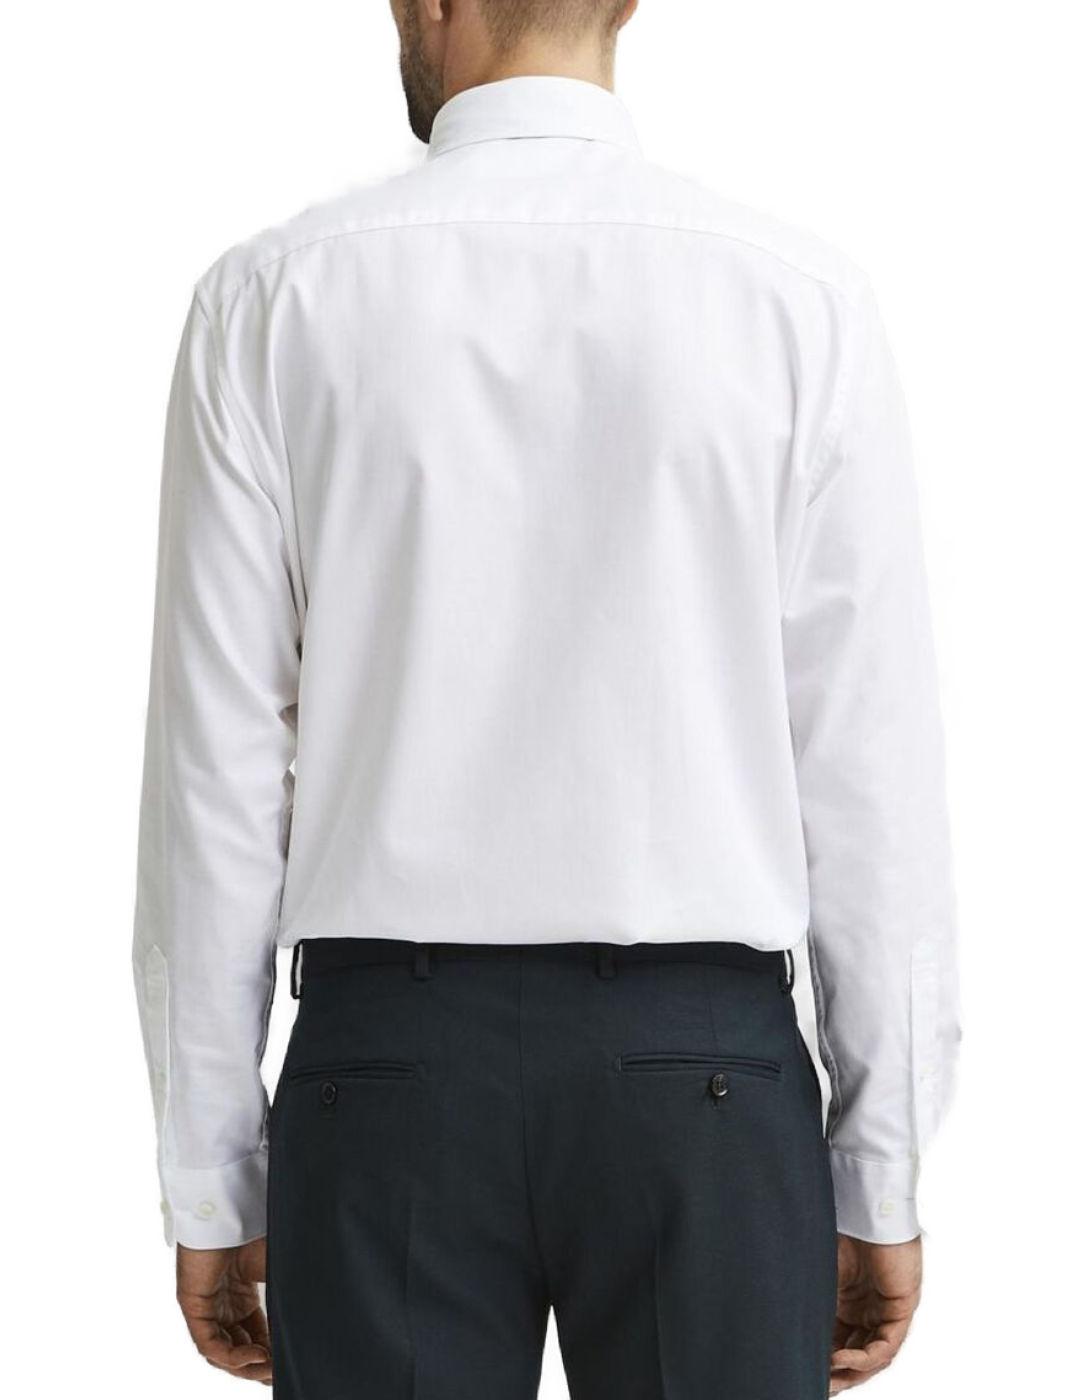 Camisa Selected Methan de vestir slim fit blanca de hombre